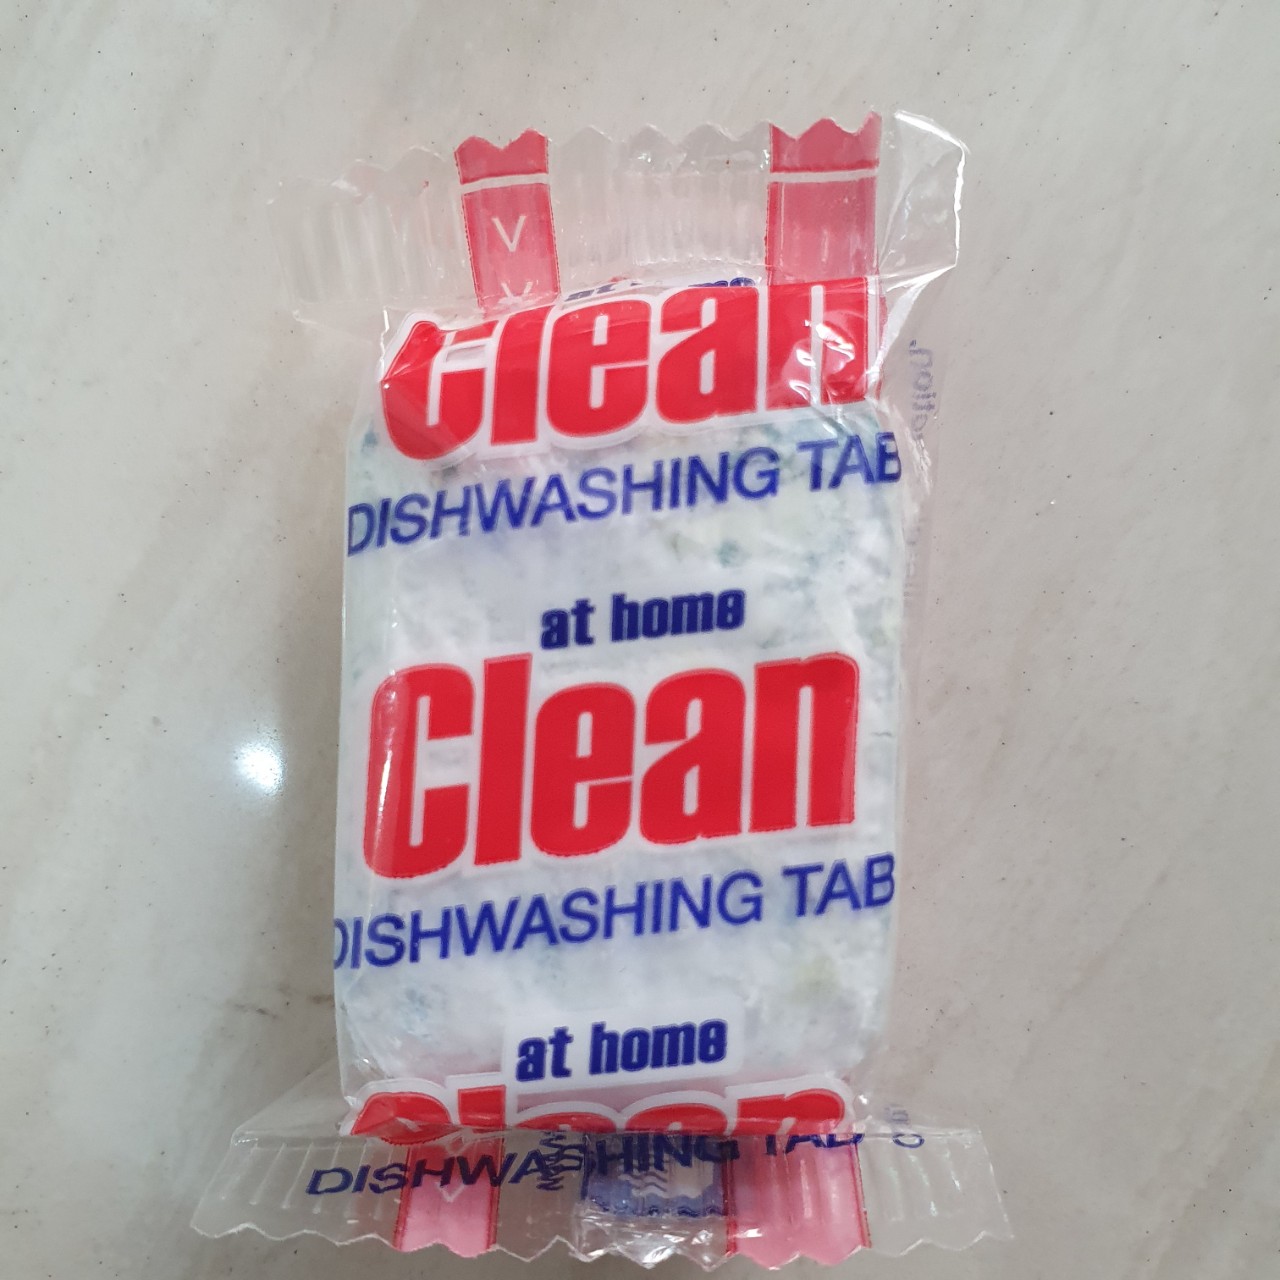 Viên rửa bát At home Clean 5-in-1 100 viên made in EU 3